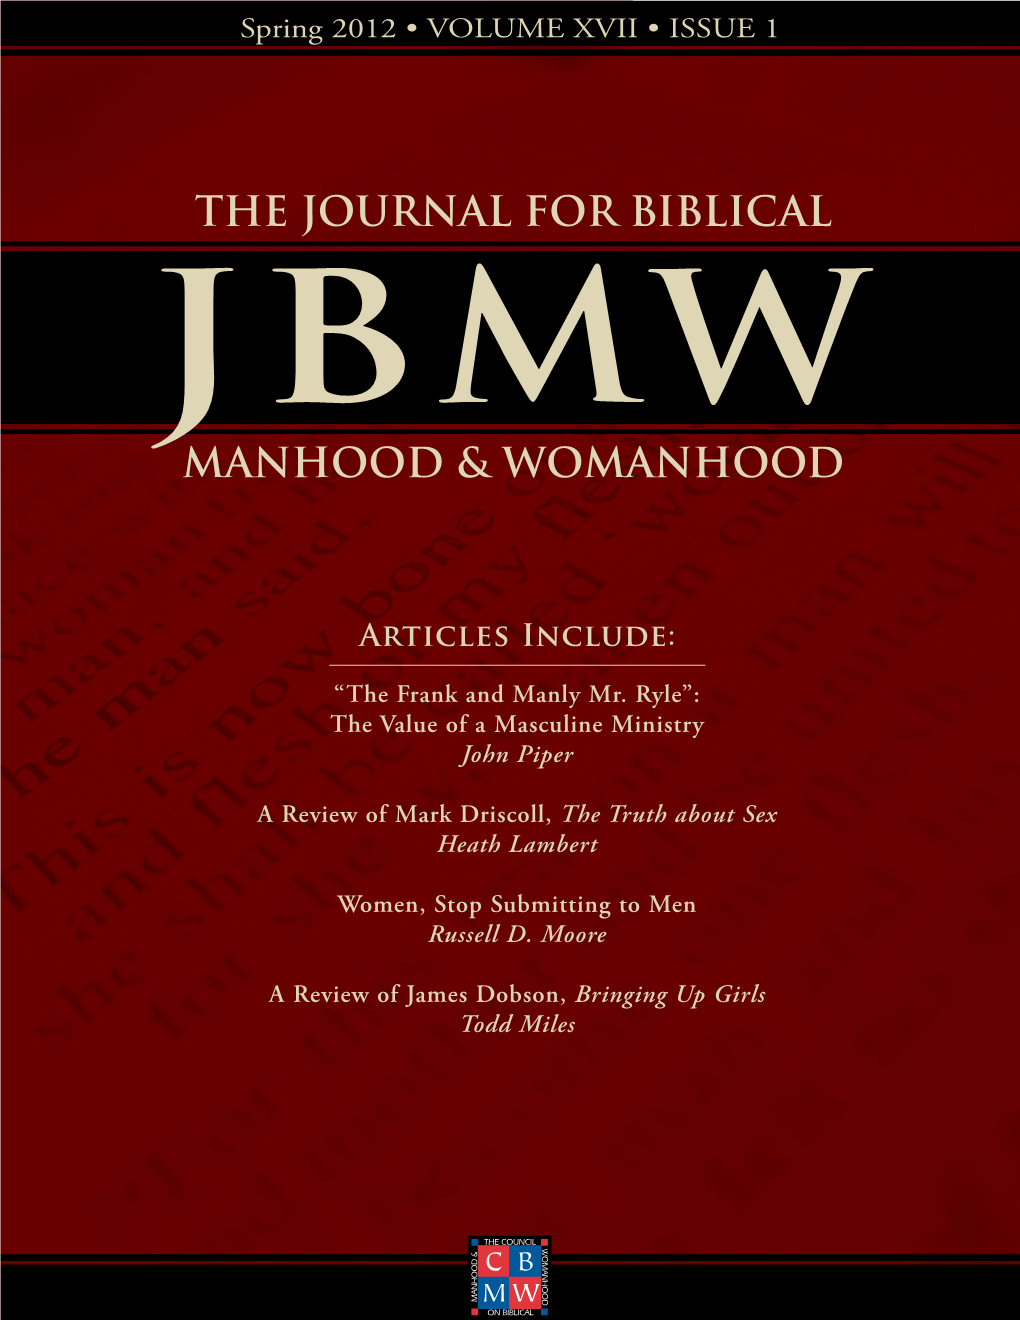 The Journal for Biblical Manhood & Womanhood